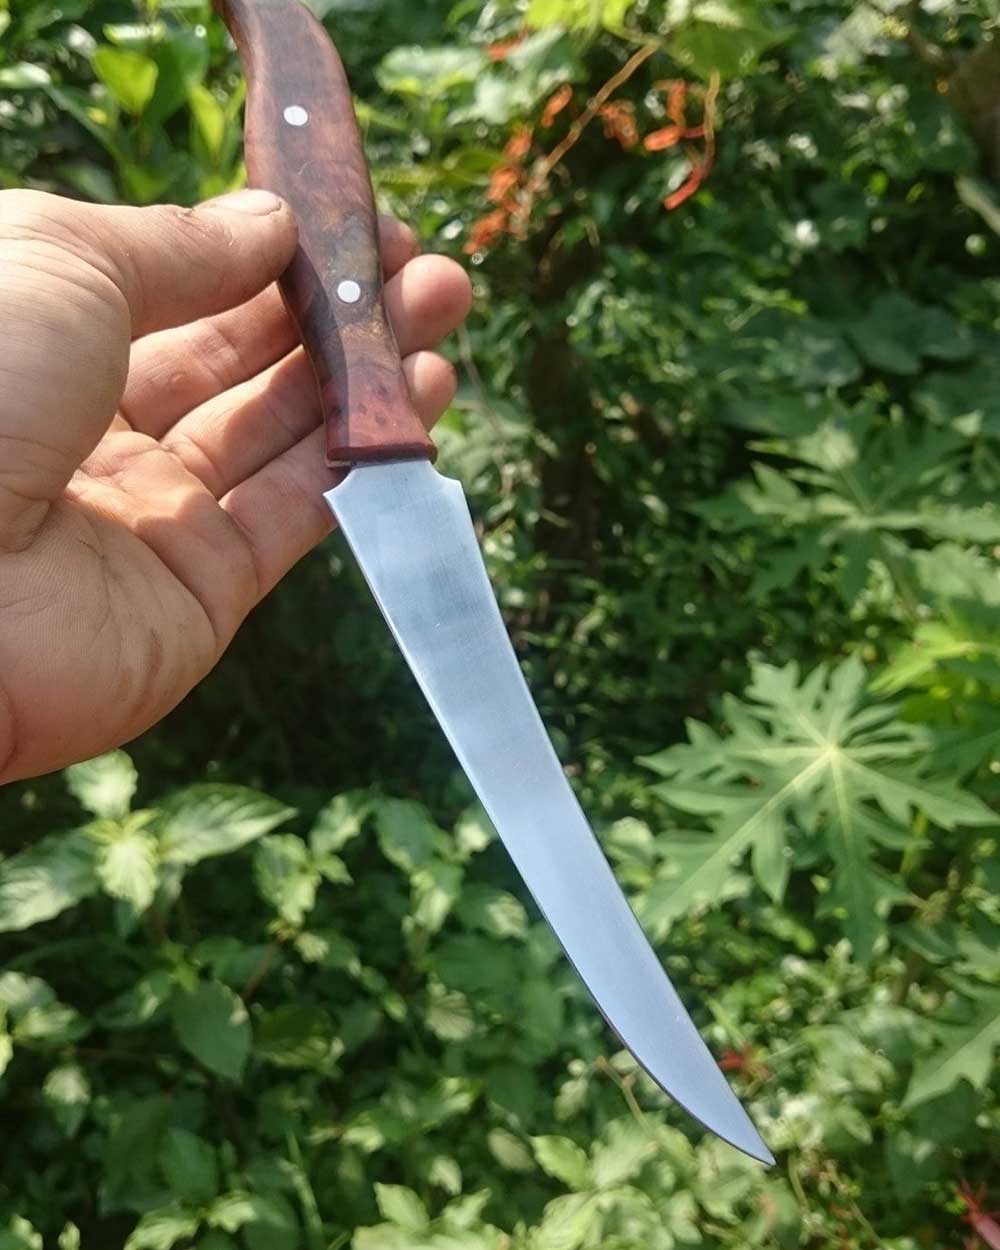 a knife handmade for diudus customers